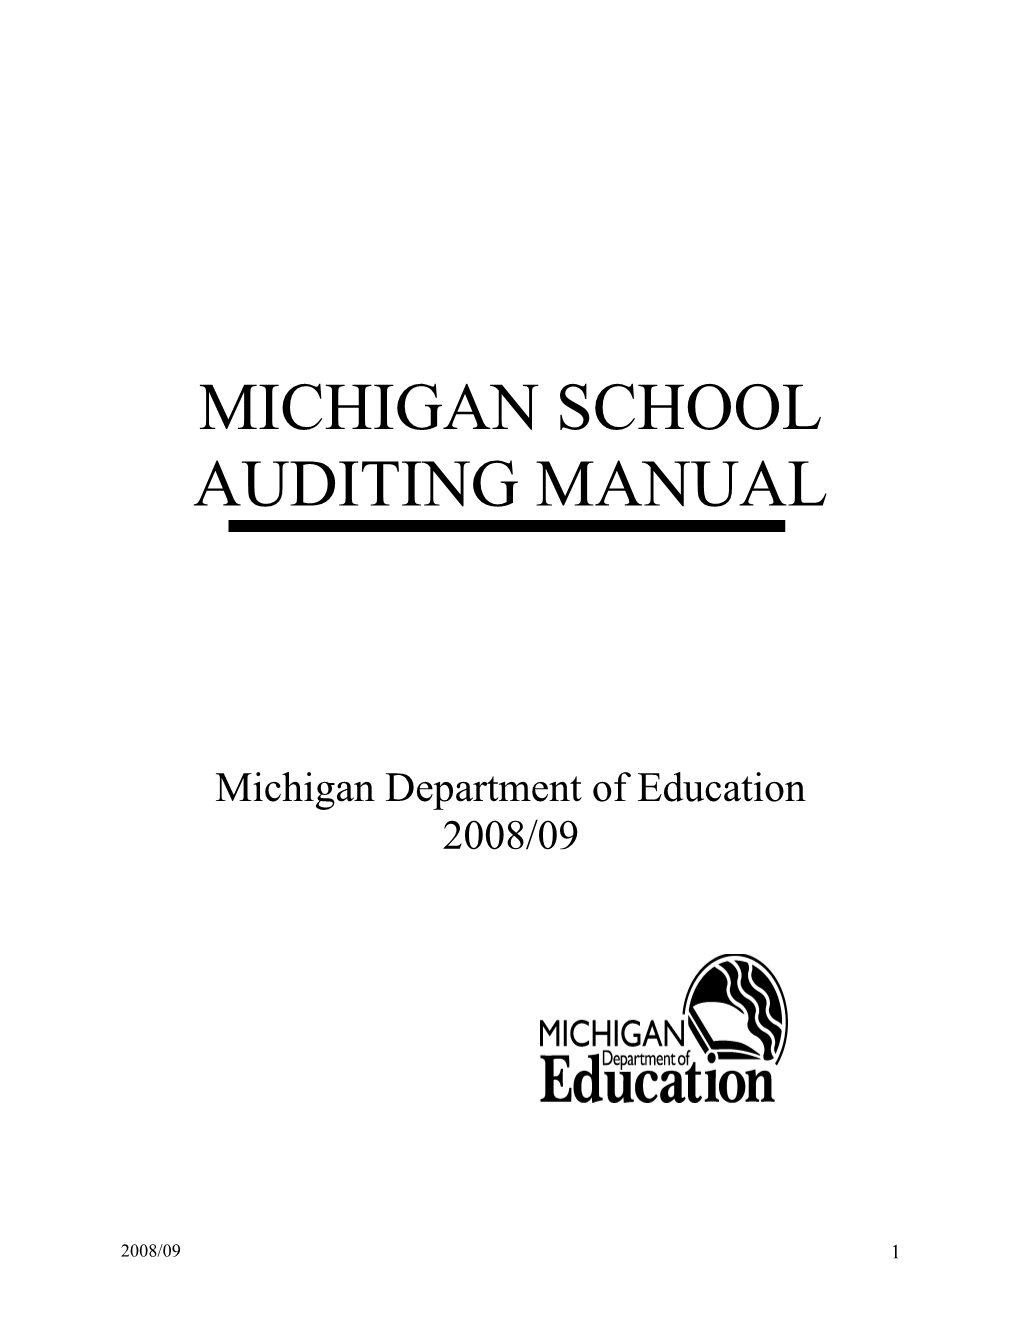 Auditing Manual